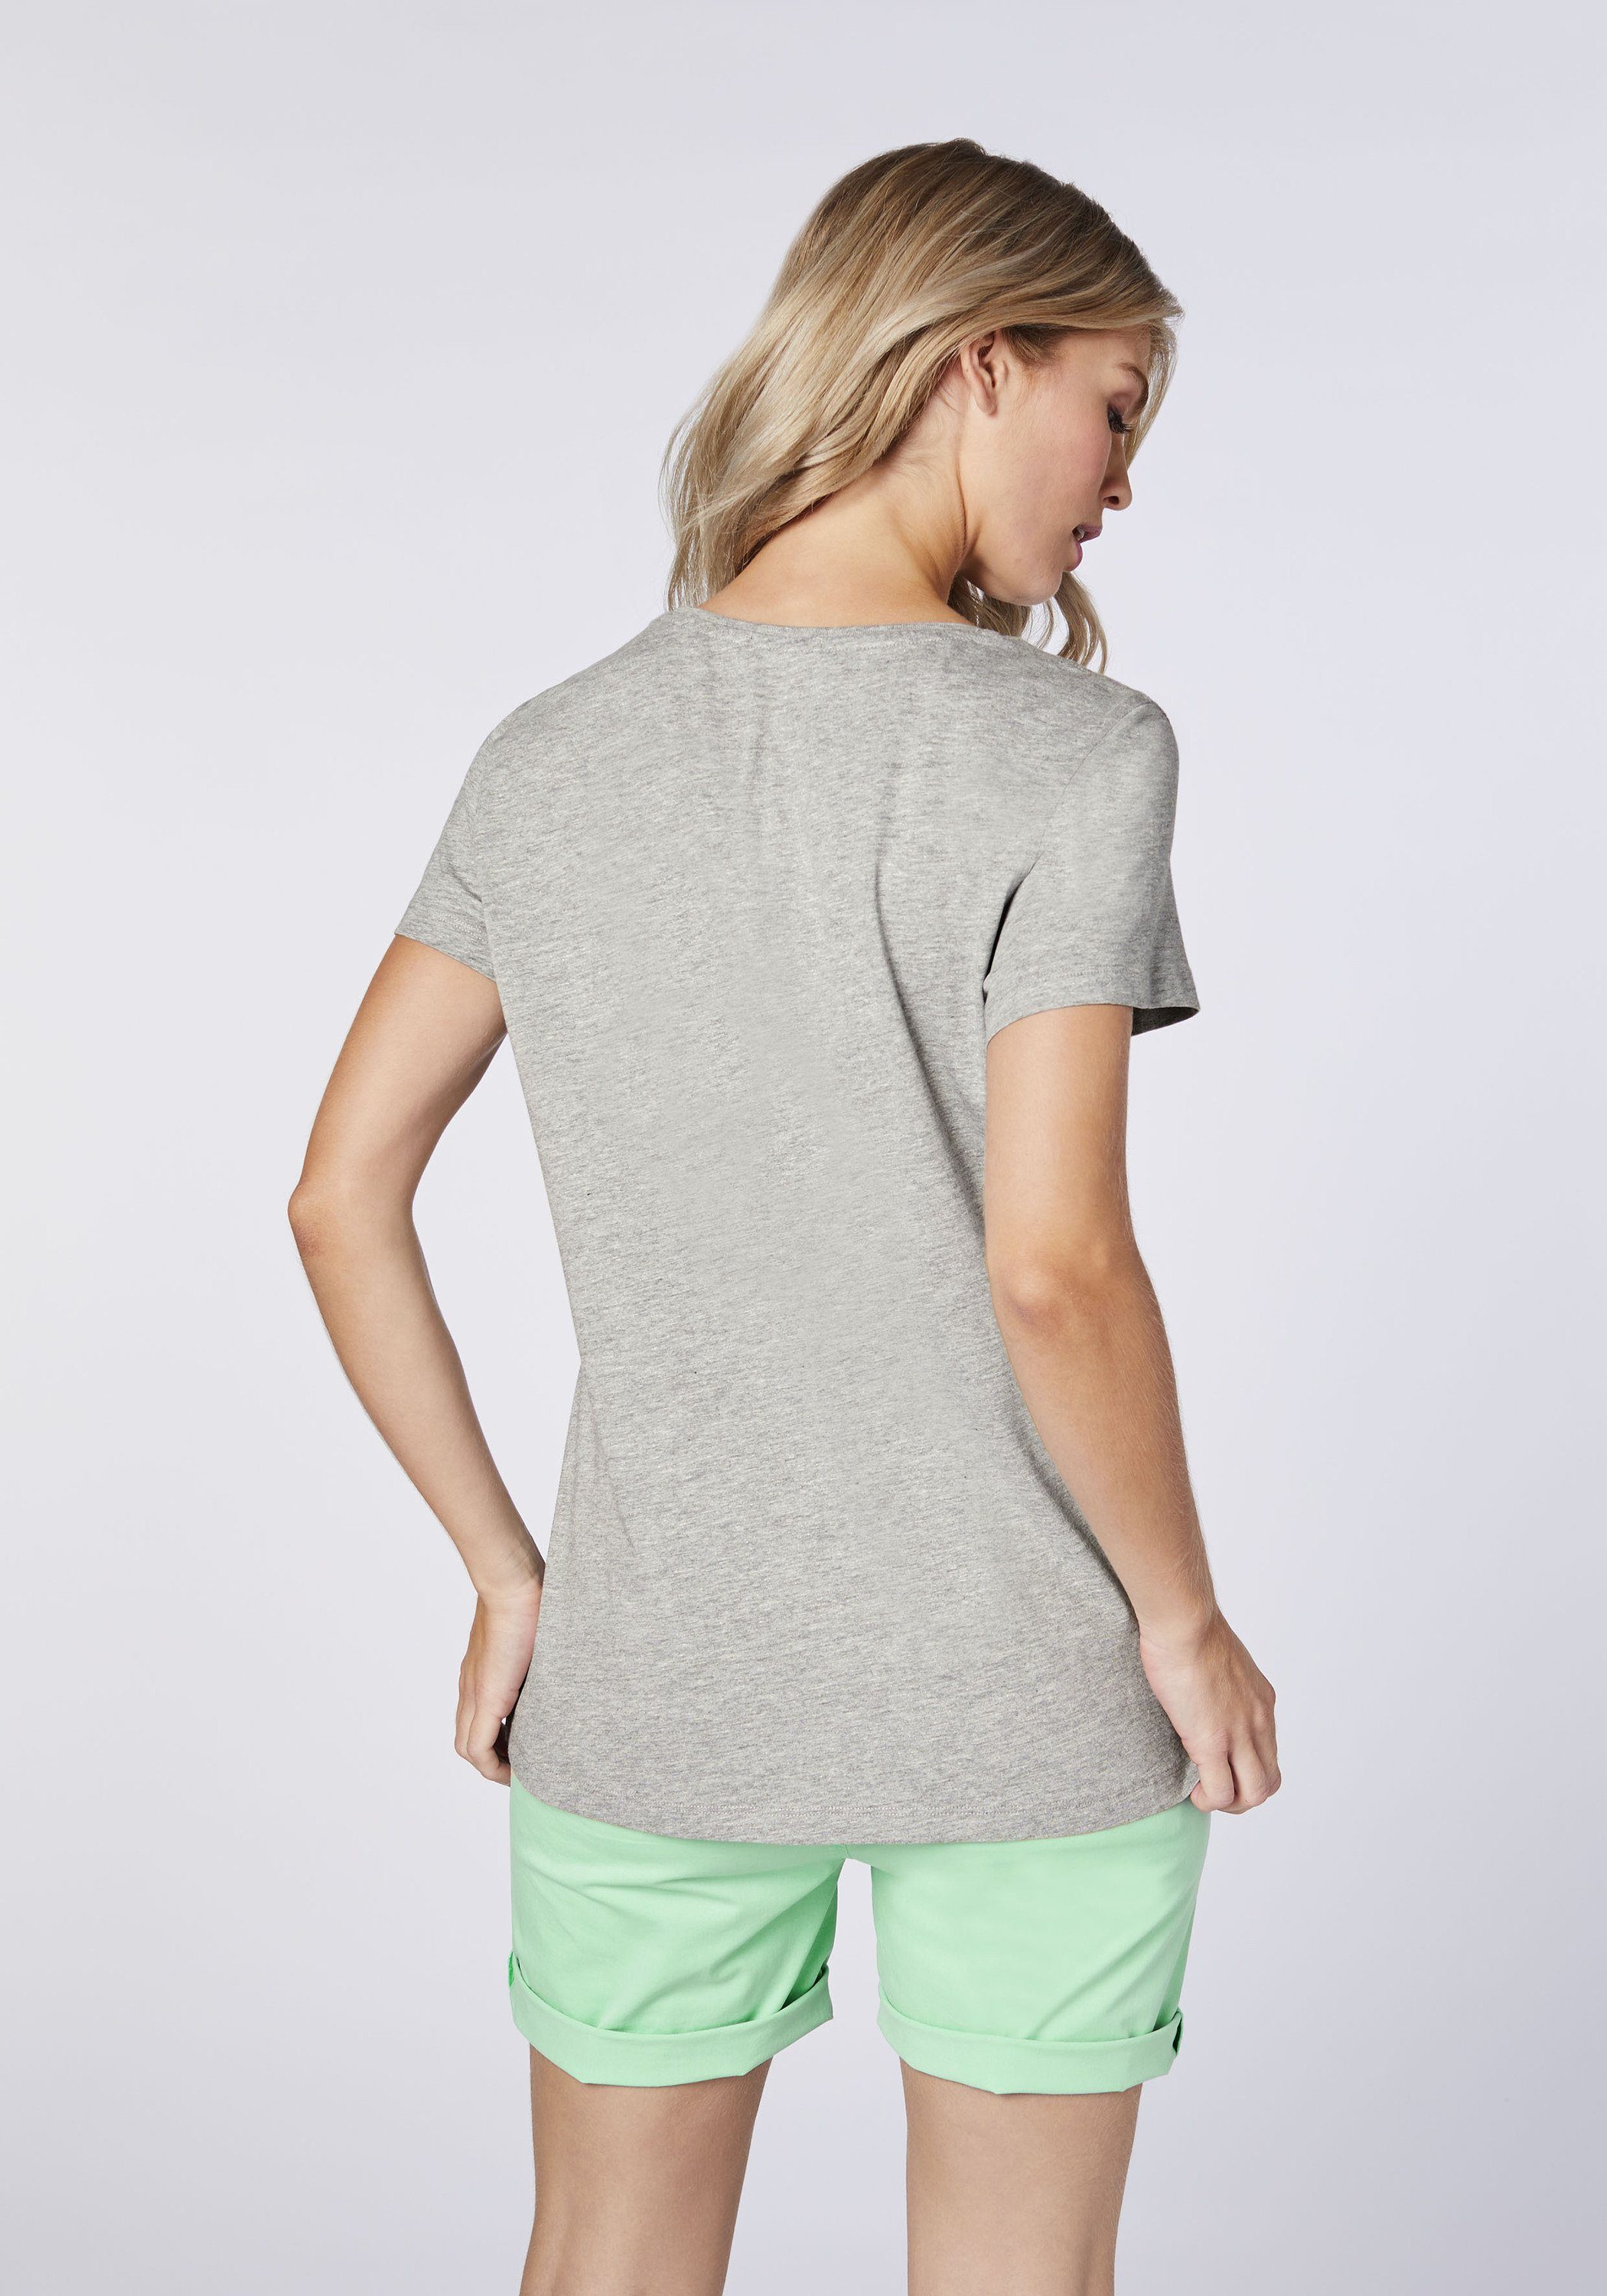 mit Medium Frontprint Grey/Pink farbenfrohem T-Shirt 1 Print-Shirt Chiemsee